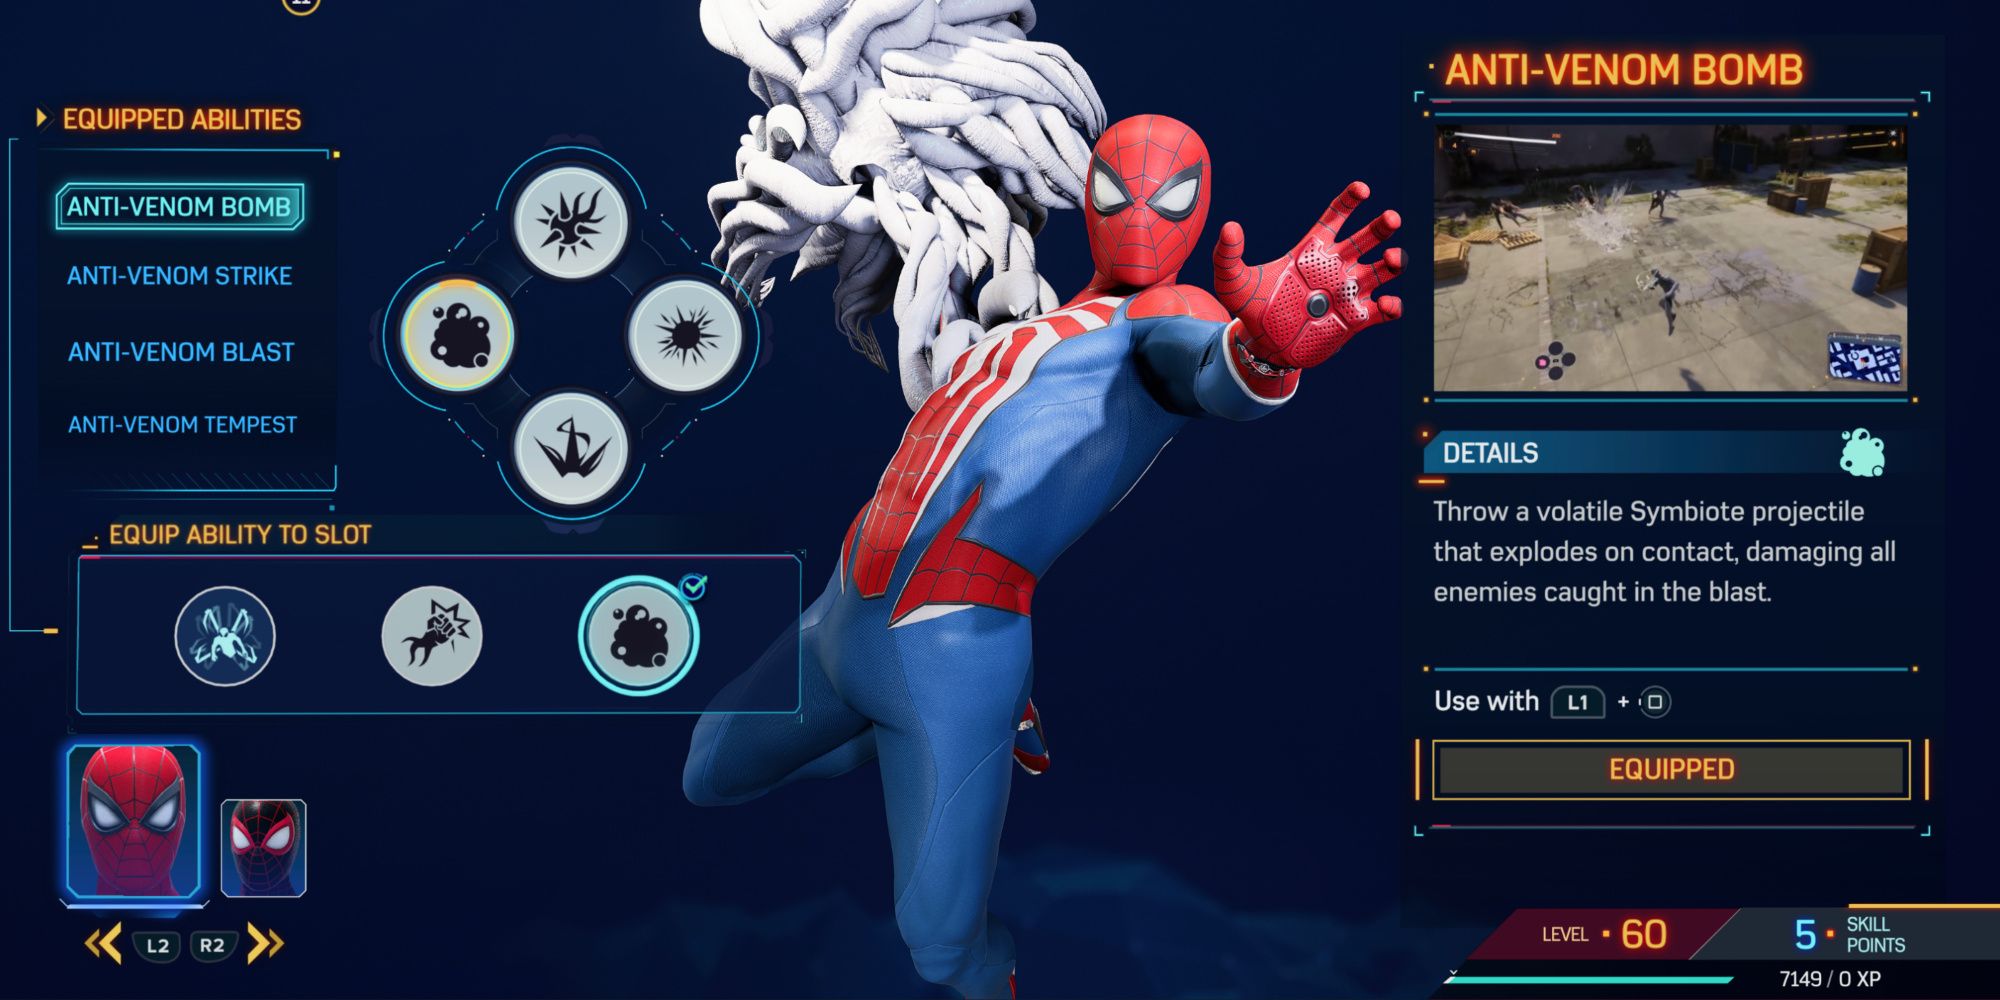 Anti-Venom Bomb ability in Marvel's Spider-Man 2